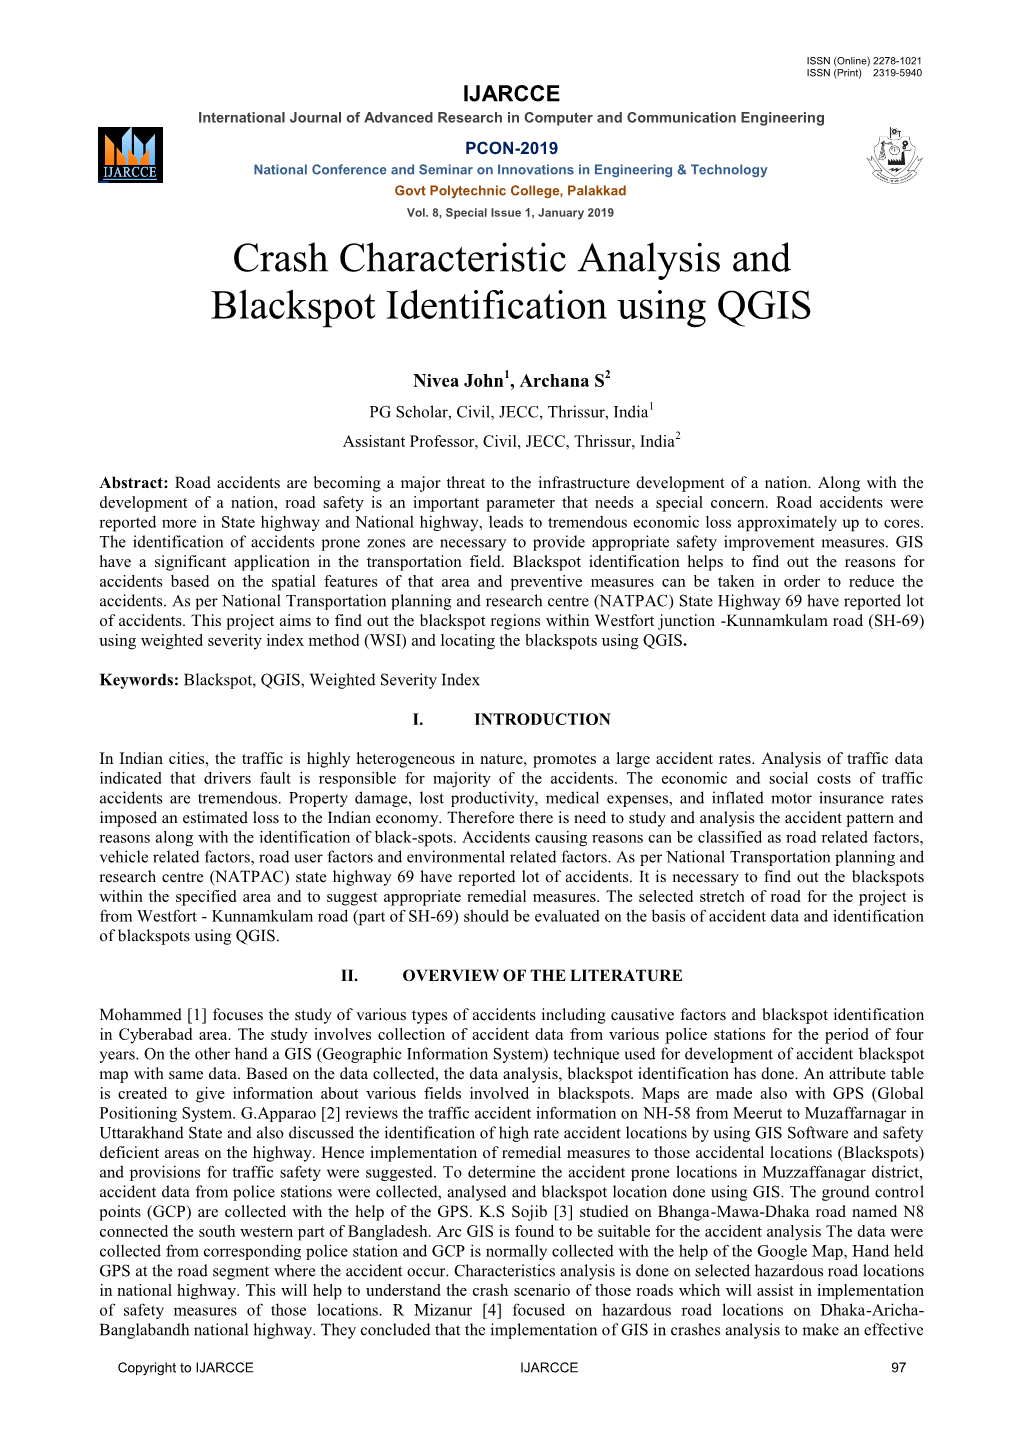 Crash Characteristic Analysis and Blackspot Identification Using QGIS